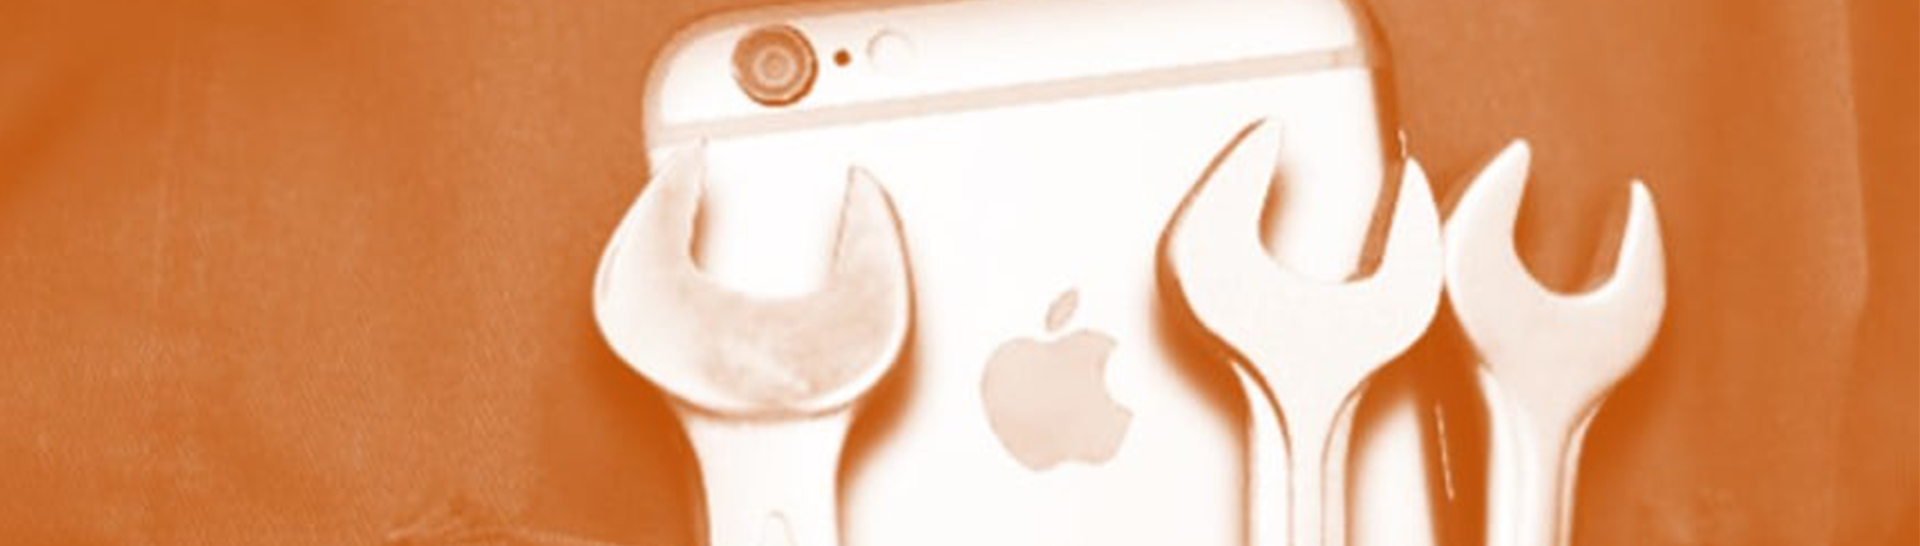 Apple new self-service repair resized